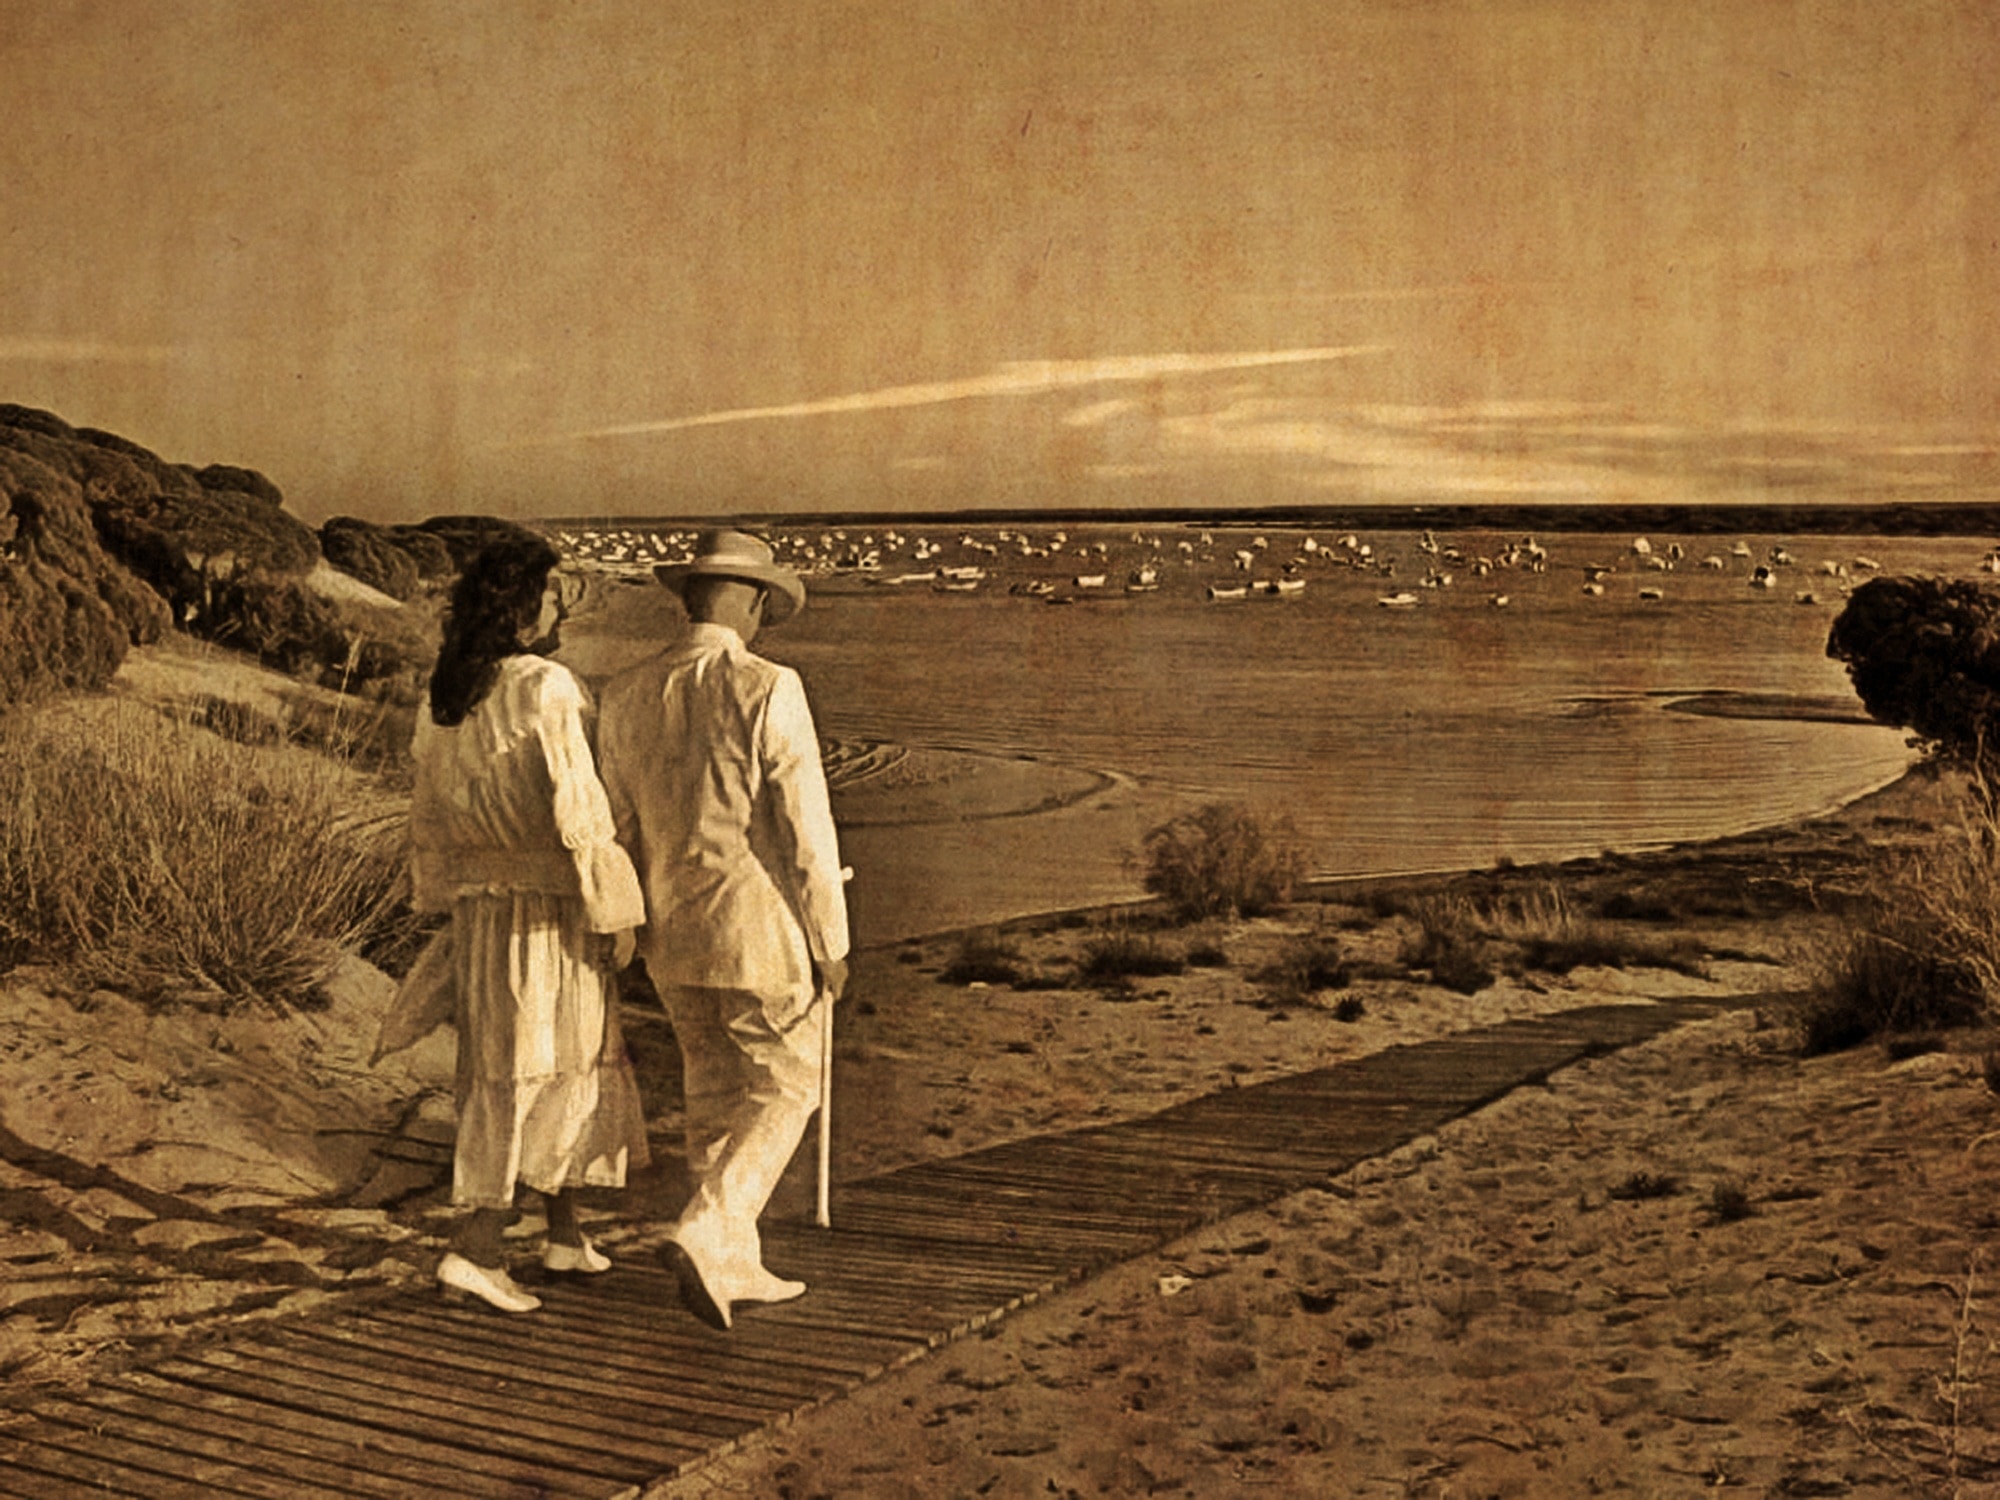 man and woman walking near seashore